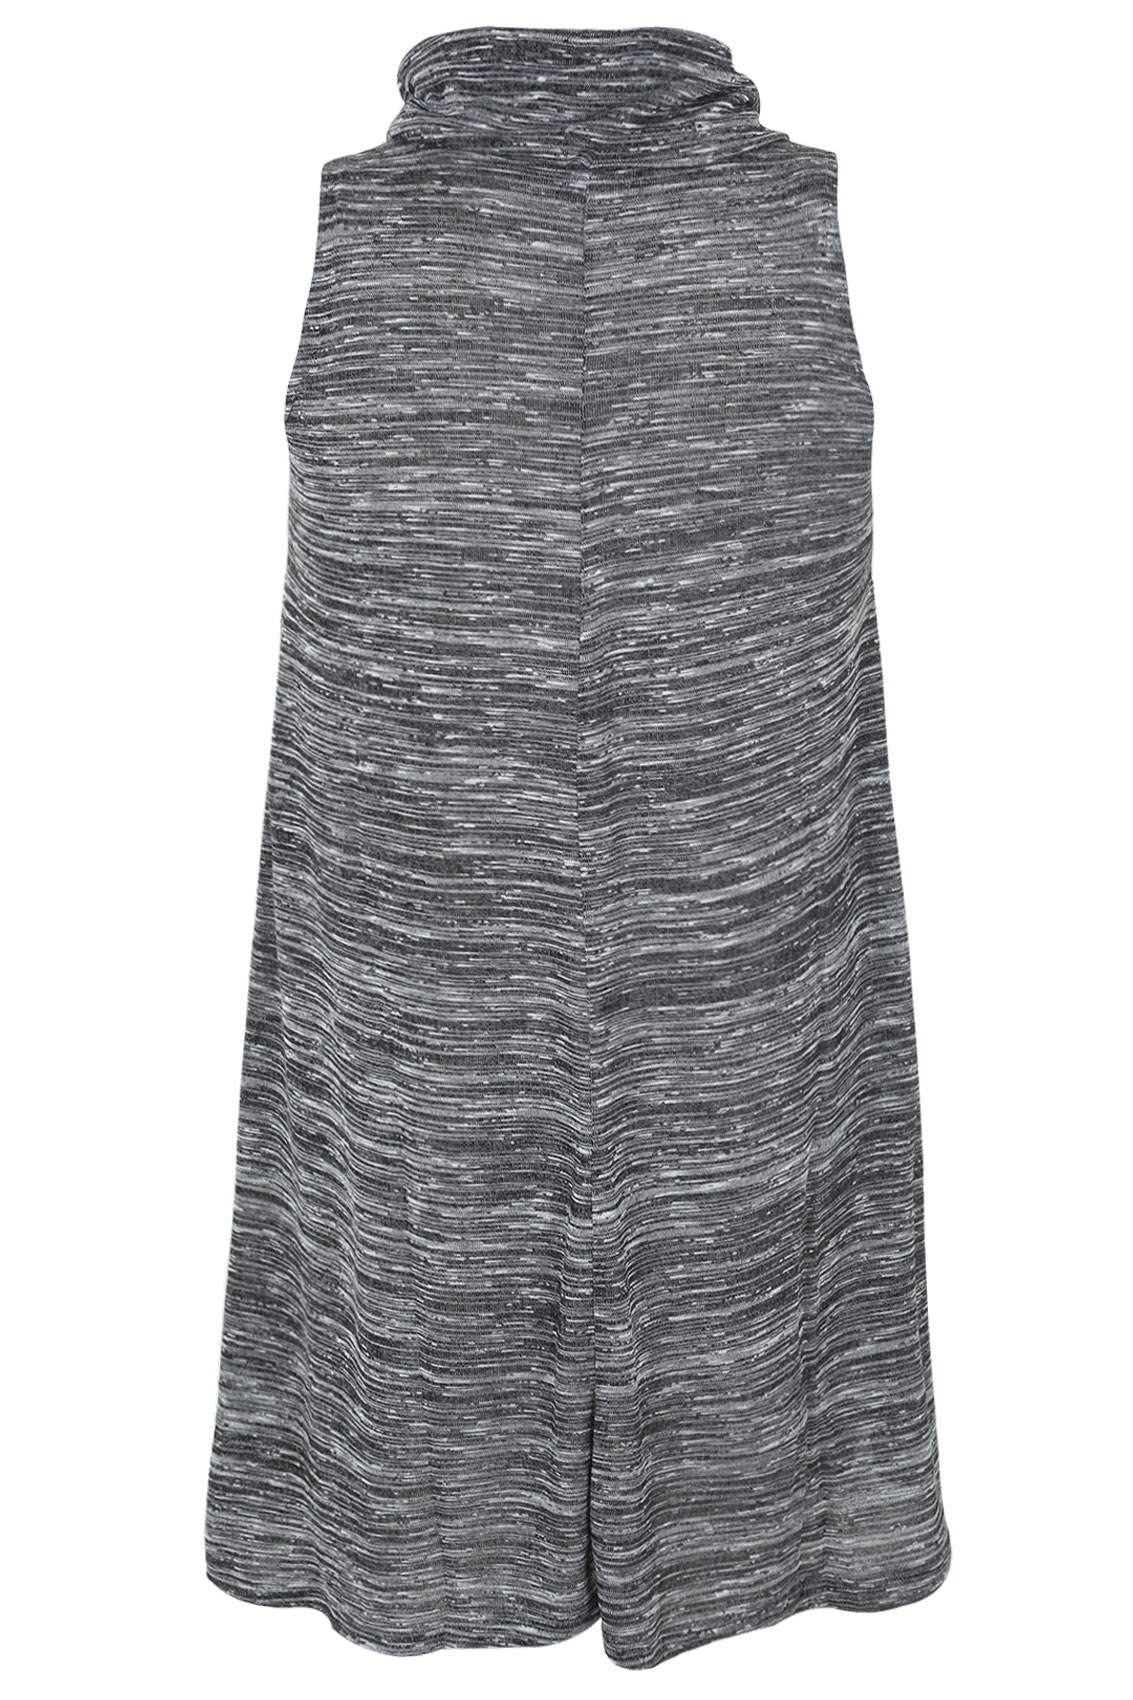 Grey Marl Sleeveless Cowl Neck Dress Plus Size 14,16,18,20,22,24,26,28 ...